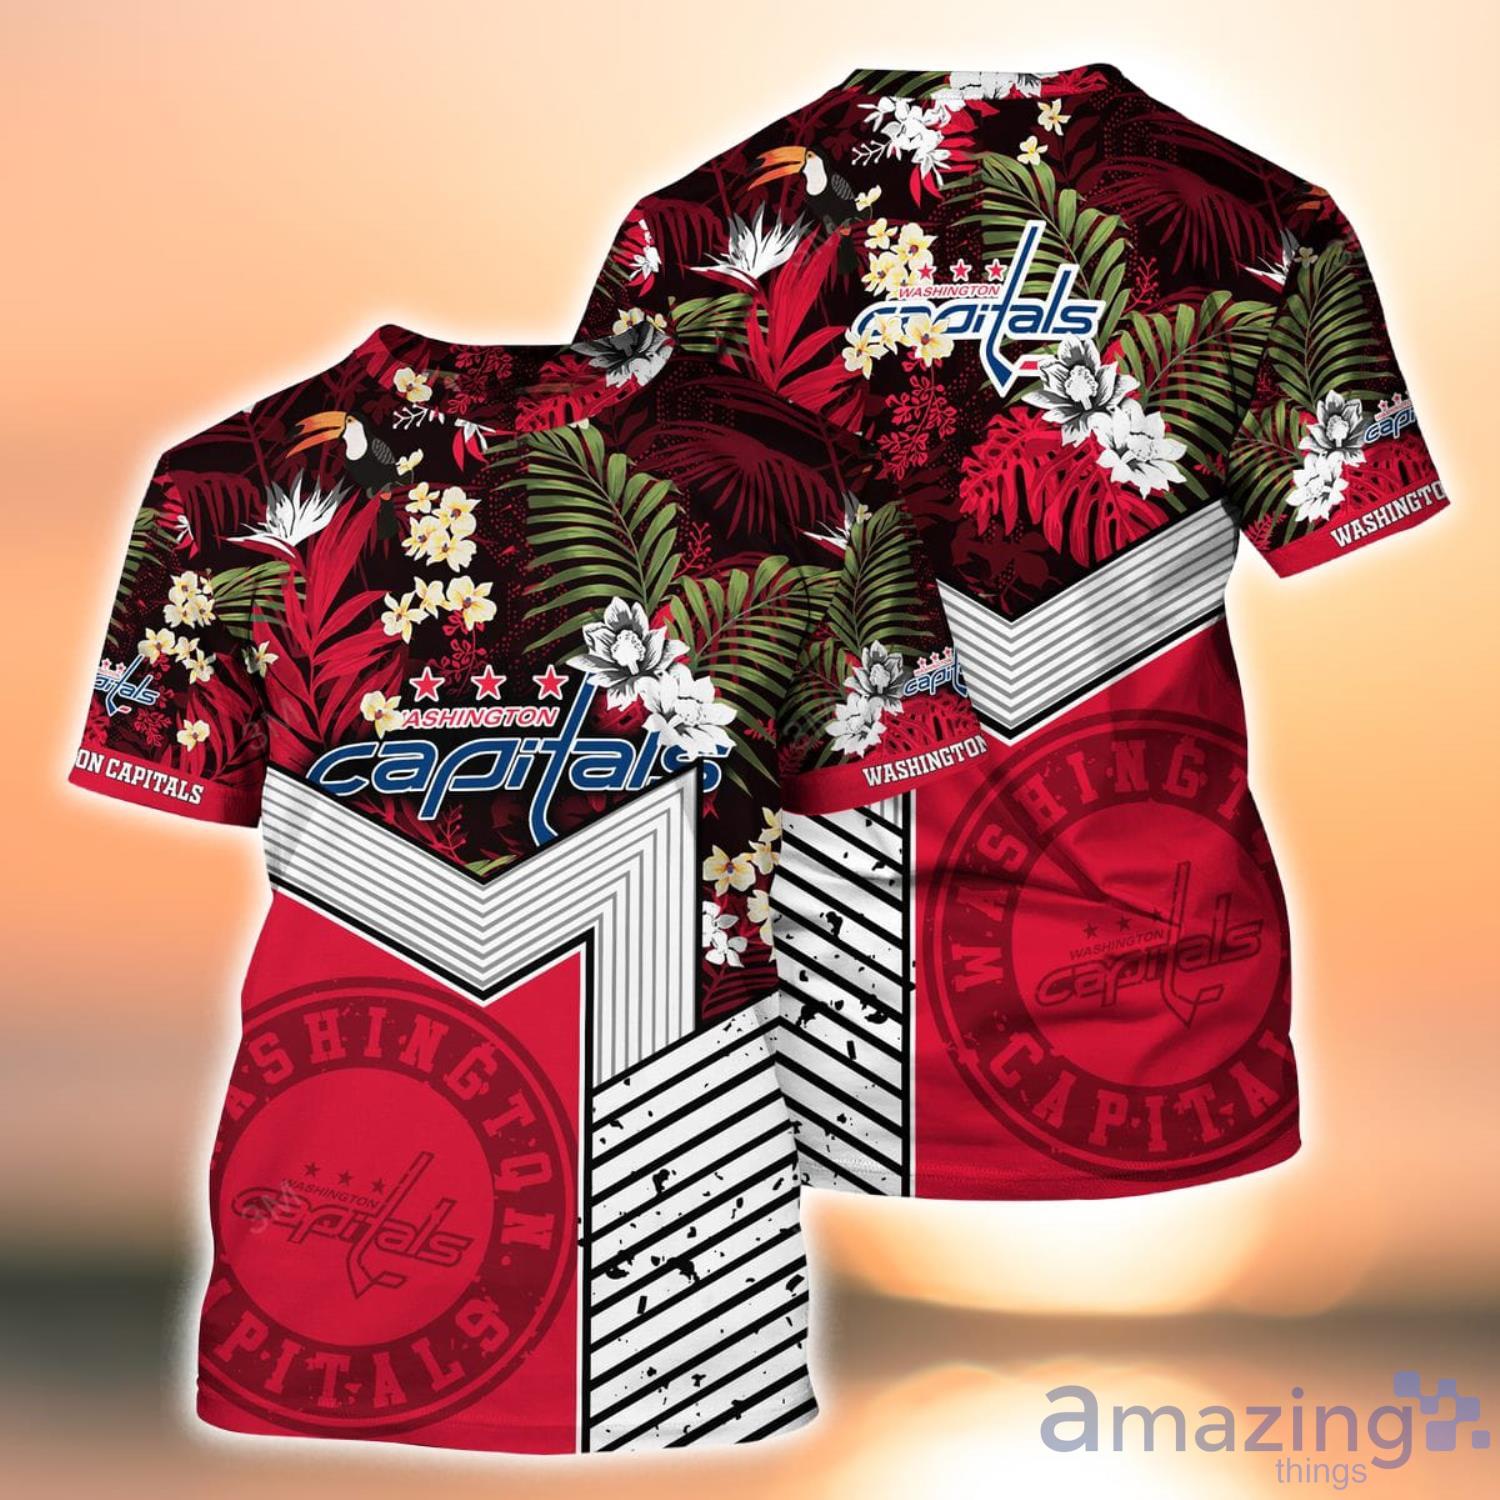 Washington Nationals Orange Hibiscus Dark Green Leaf Black Background 3D Hawaiian  Shirt Gift For Fans - Freedomdesign